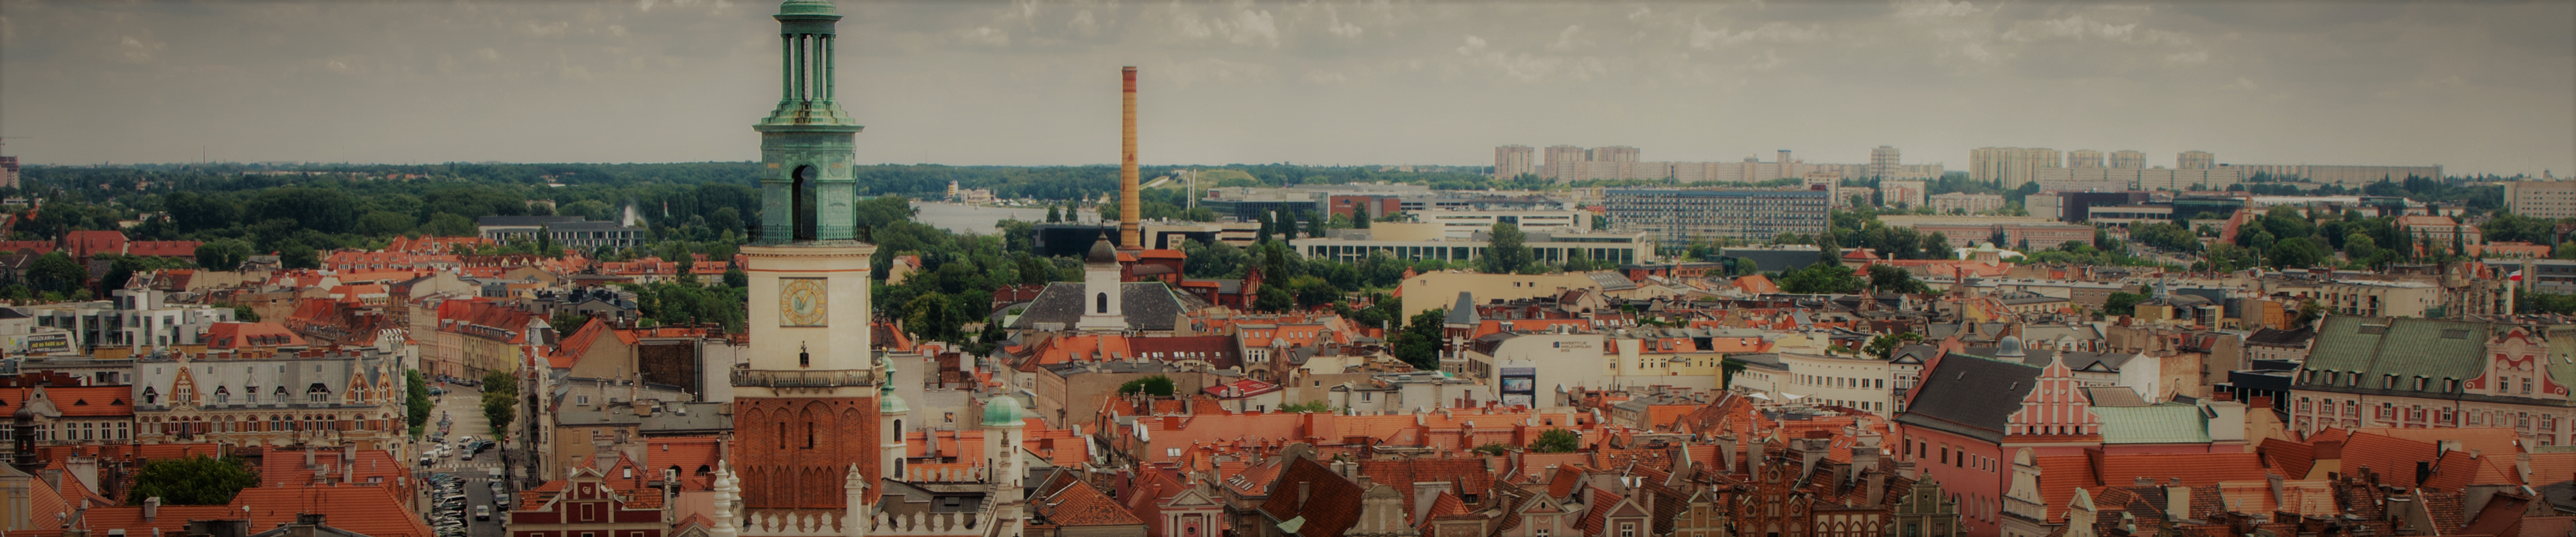 Best Digital Marketing Agencies in Poznan